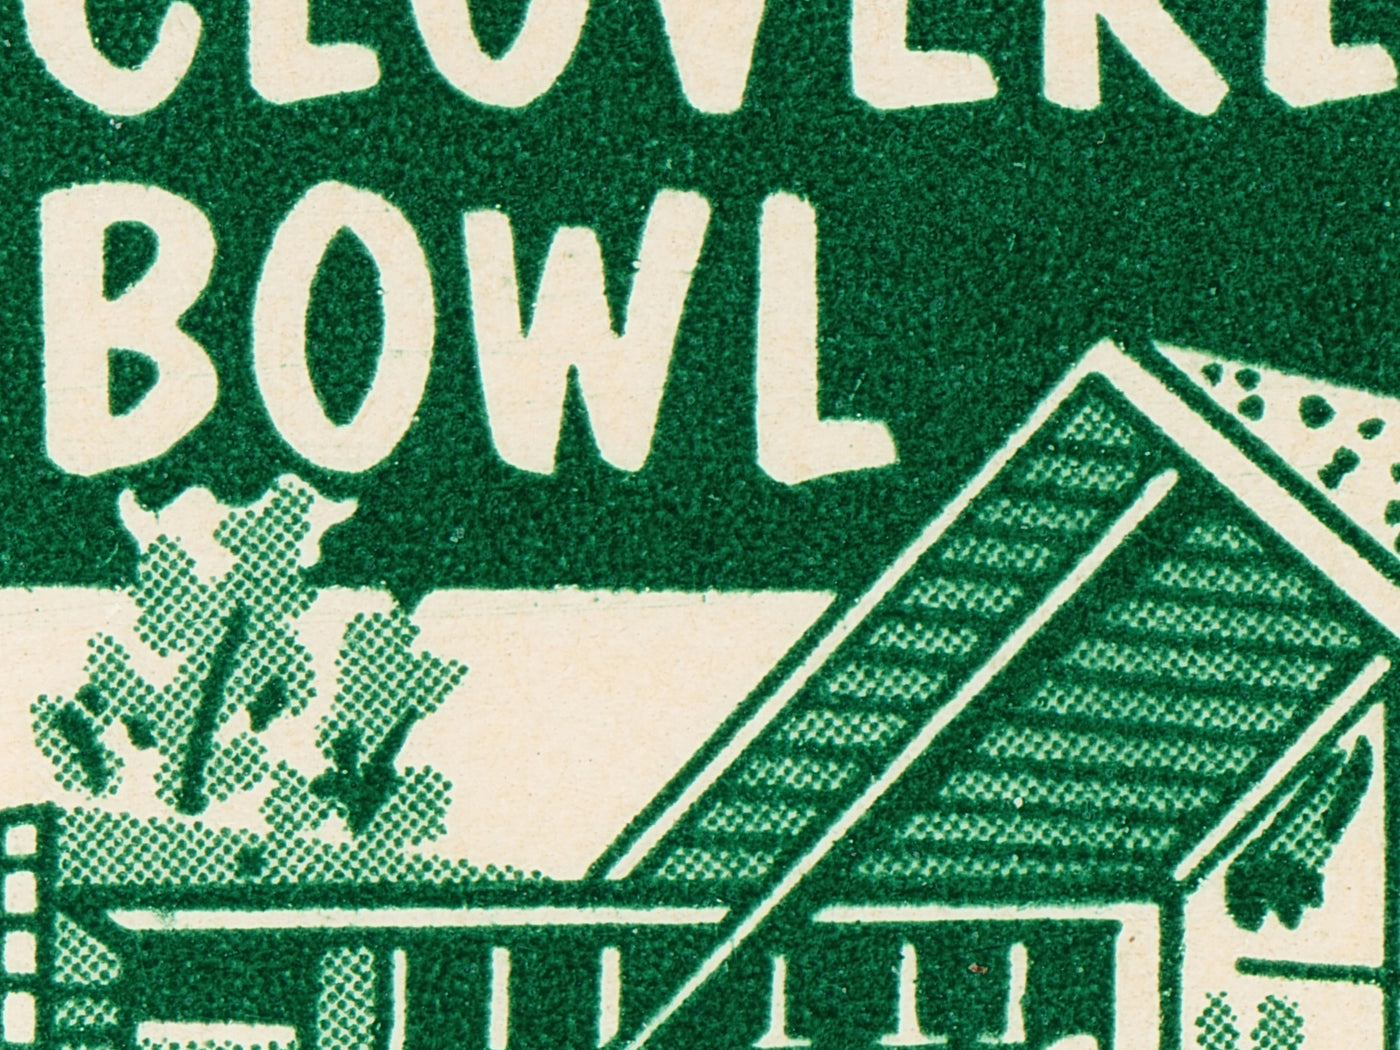 Cloverleaf Bowl Matchbook Print